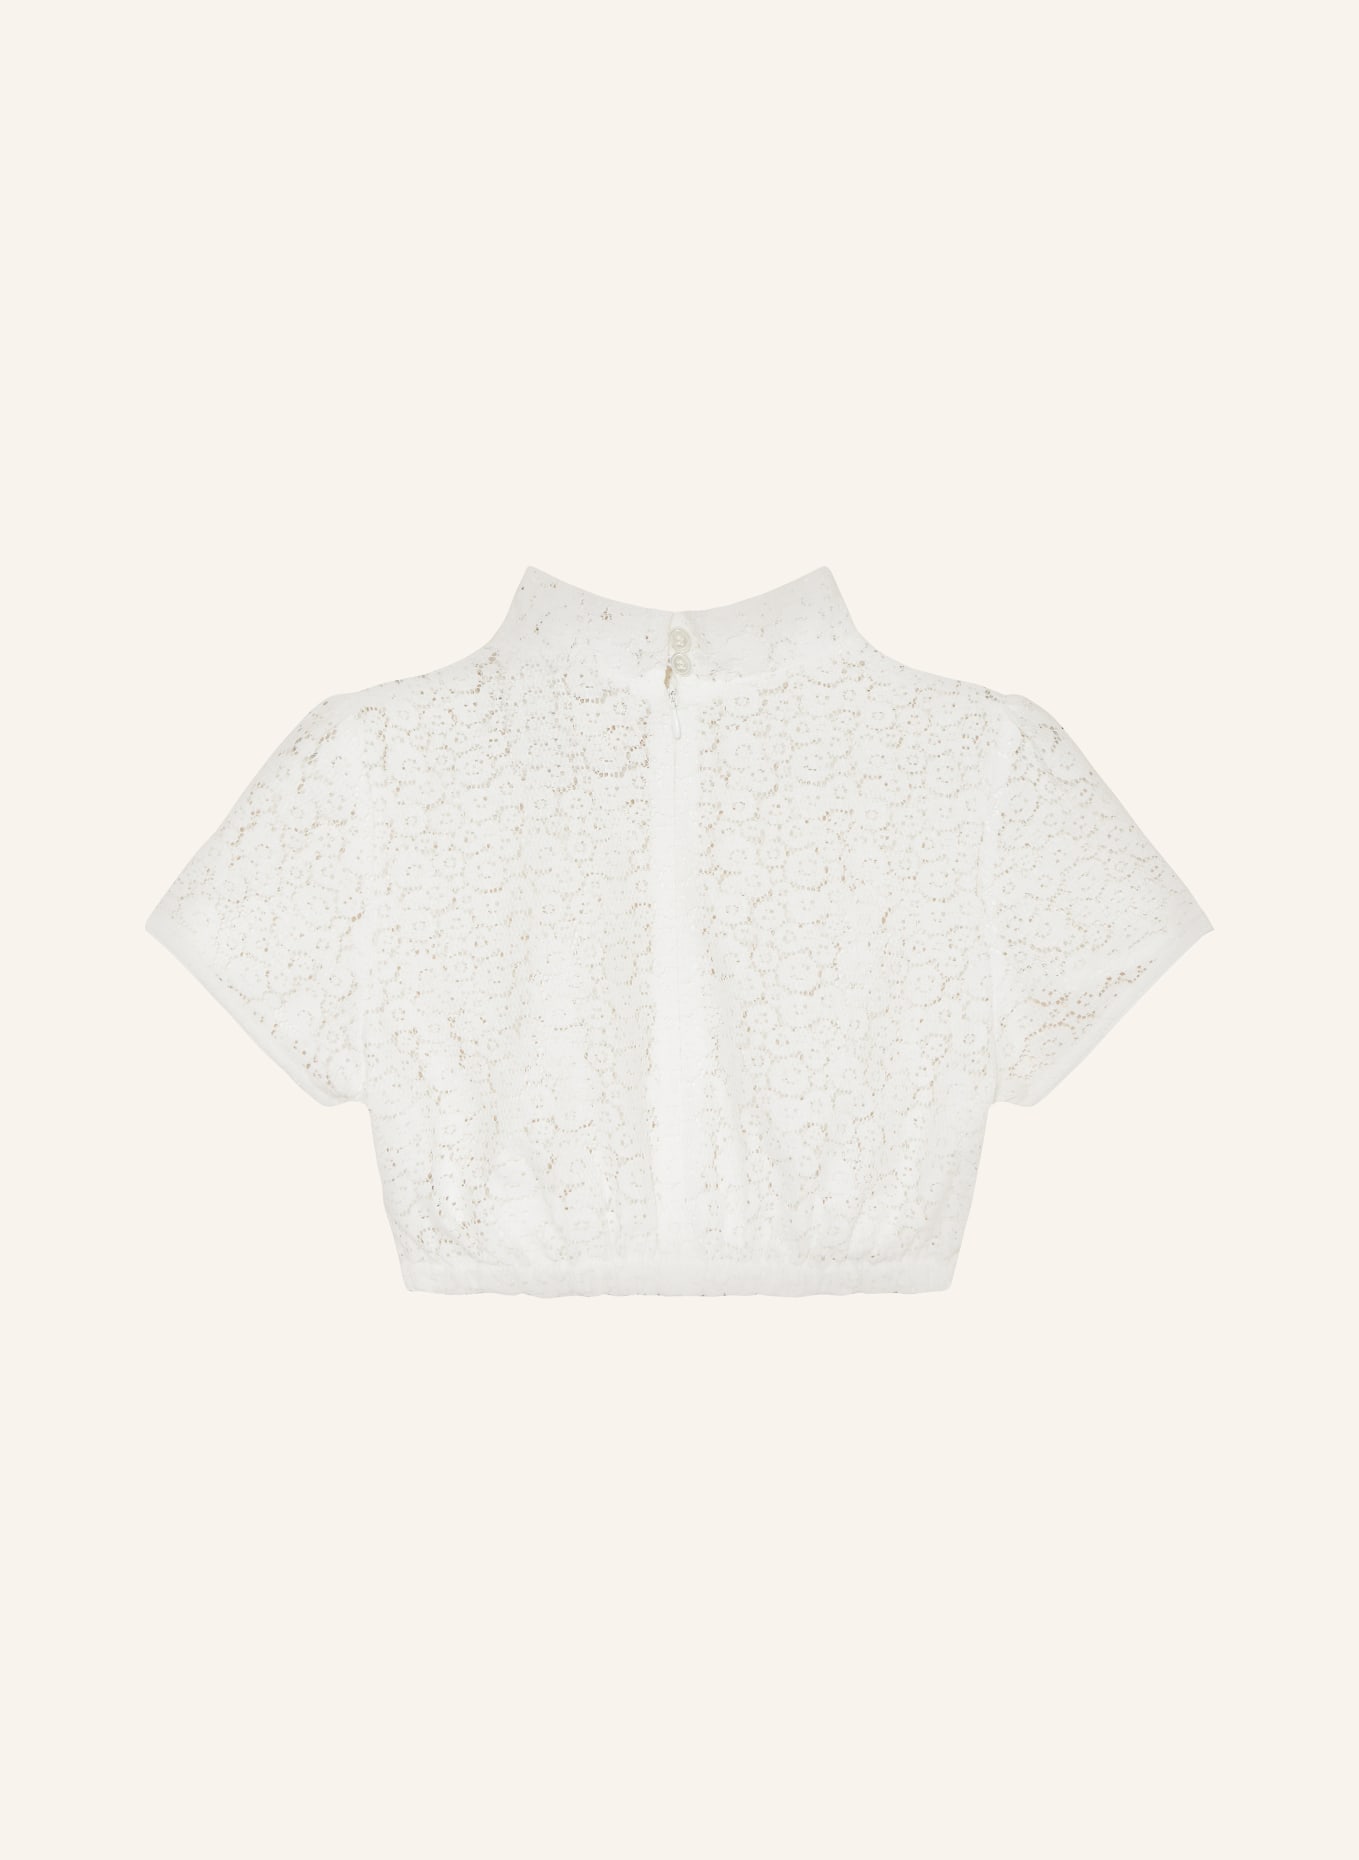 ALISSA BY KINGA MATHE Dirndl blouse INGA made of lace, Color: WHITE (Image 2)